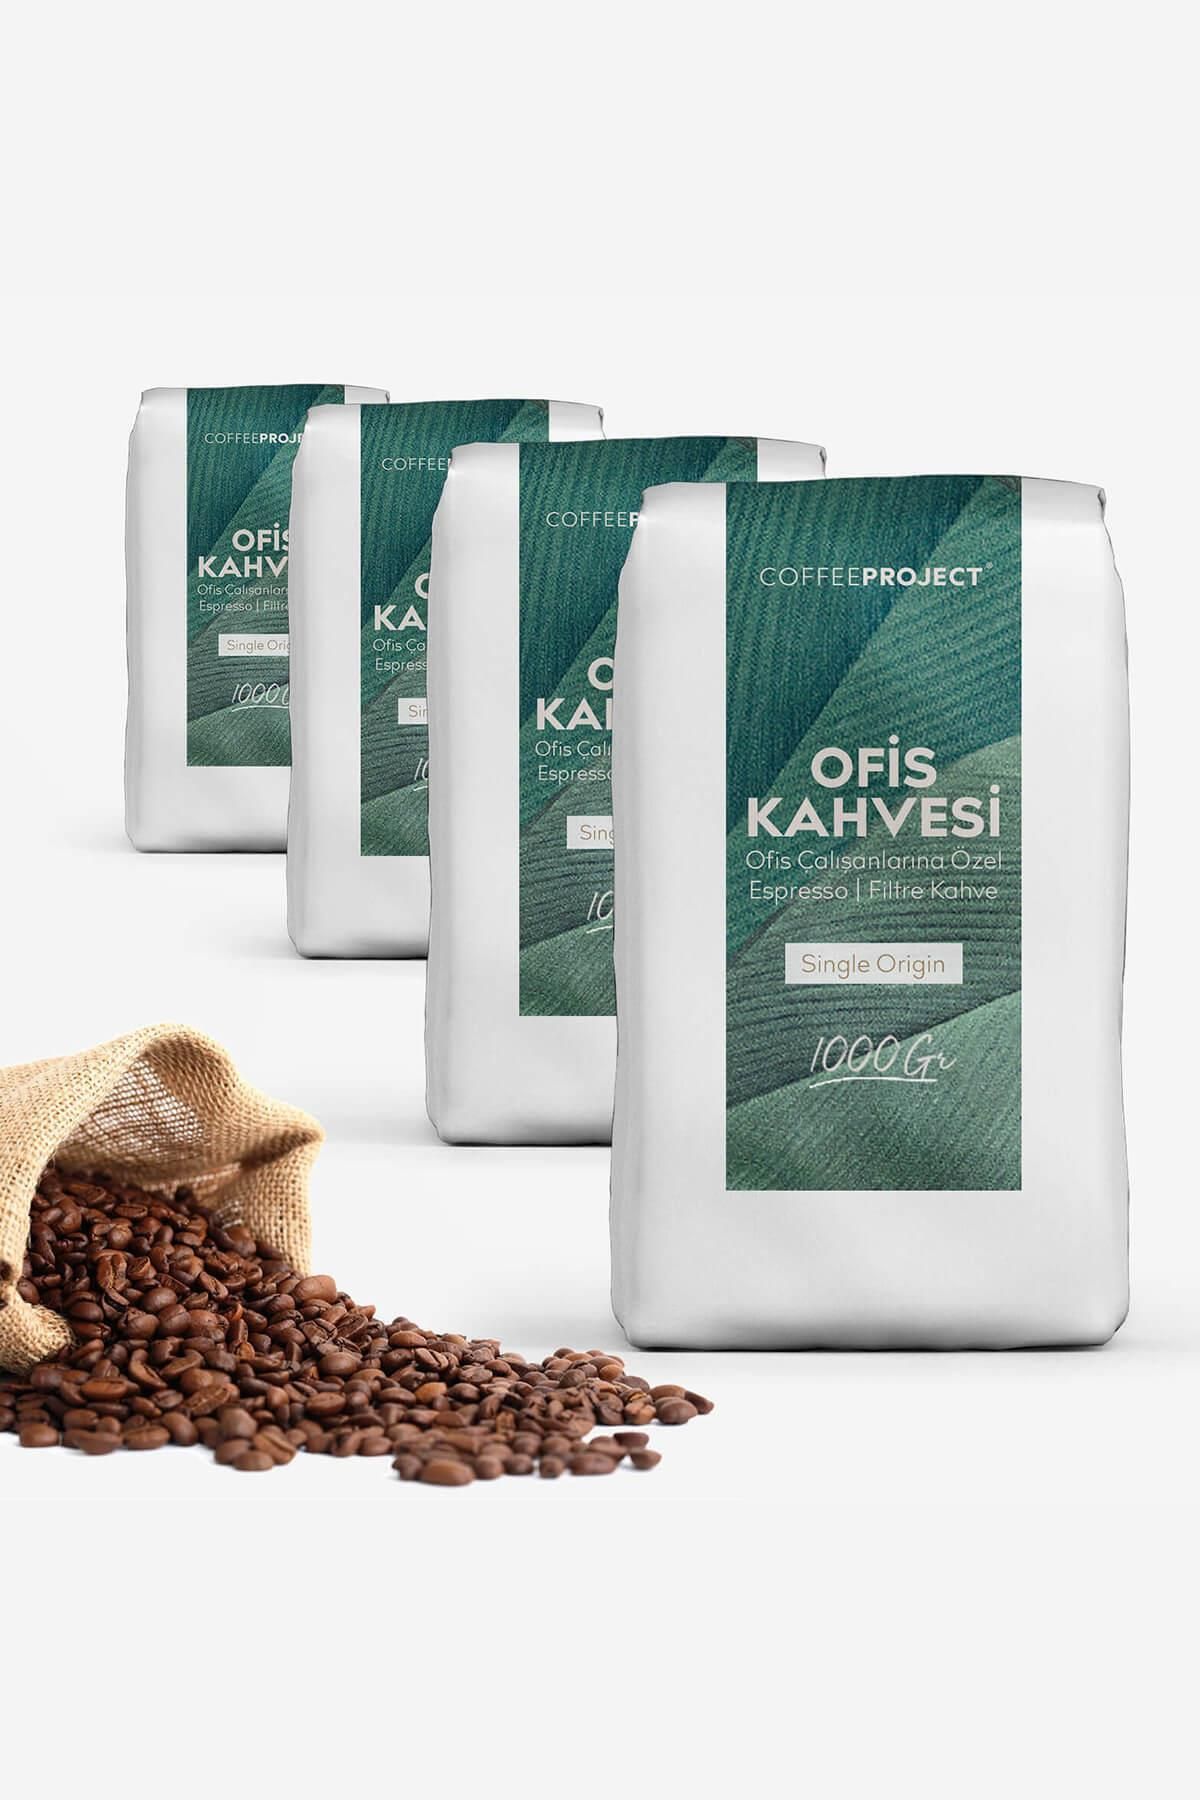 Coffee Project 4 Kg Ofis Kahvesi Filtre / Espresso Için Uygun